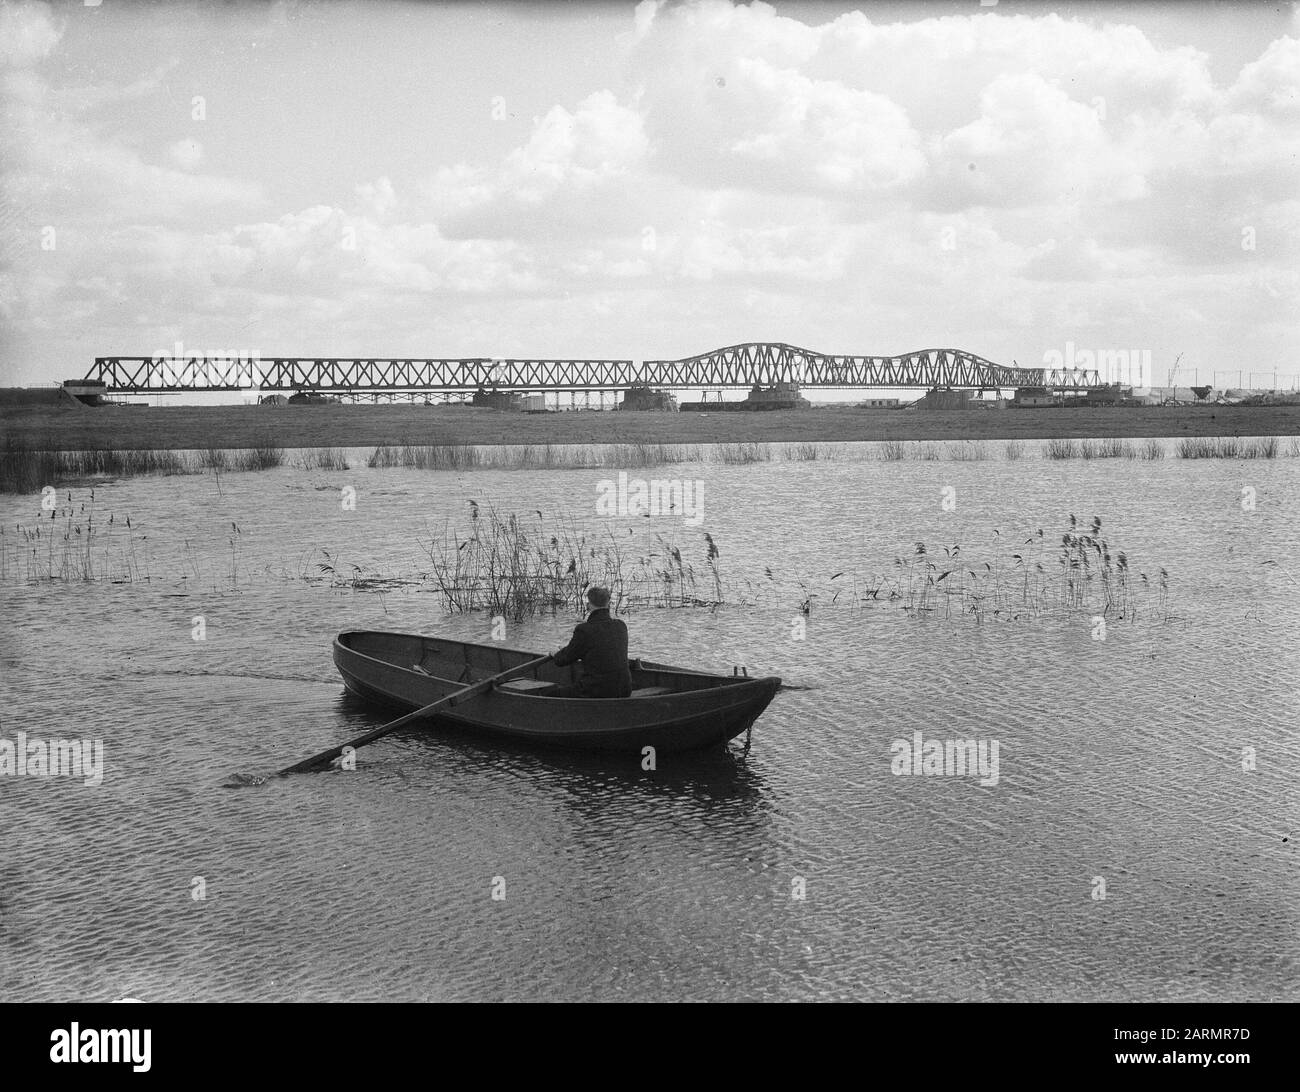 Railway bridge at Hedel Date: 25 March 1947 Location: Hedel Keywords: bridges, rivers, rowing boats, railways Stock Photo